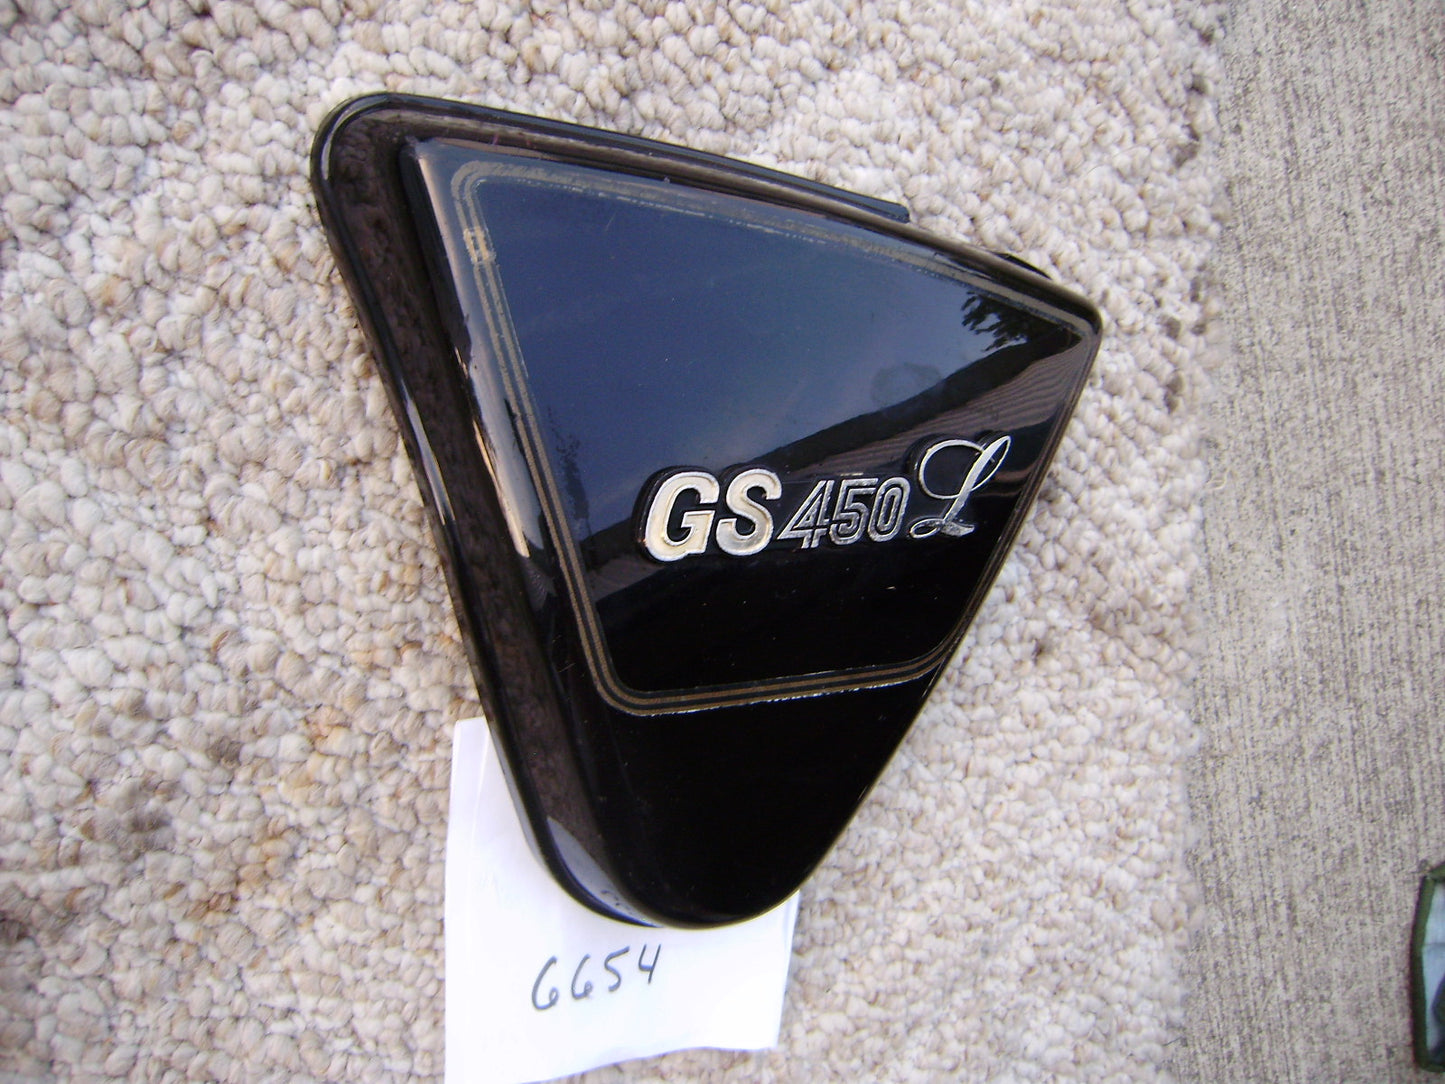 sold Ebay 11/16/21 Suzuki GS450L Black left sidecover with badge  47211-44210 sku 6654